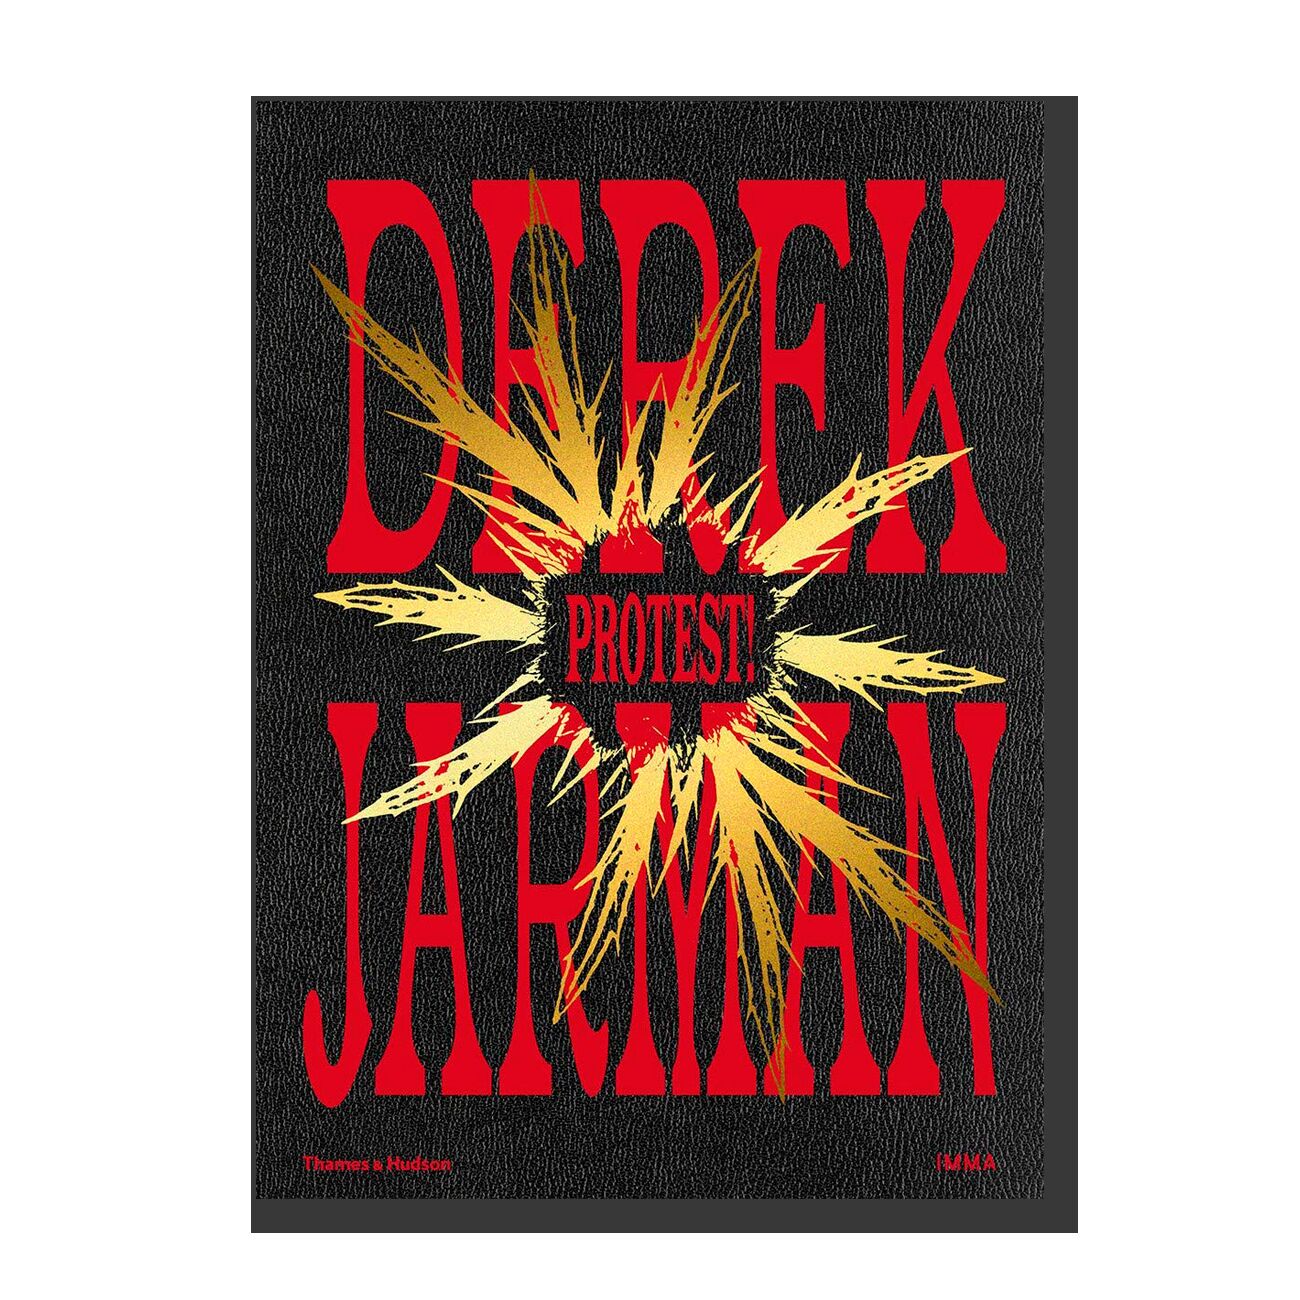 Derek Jarman: Protest